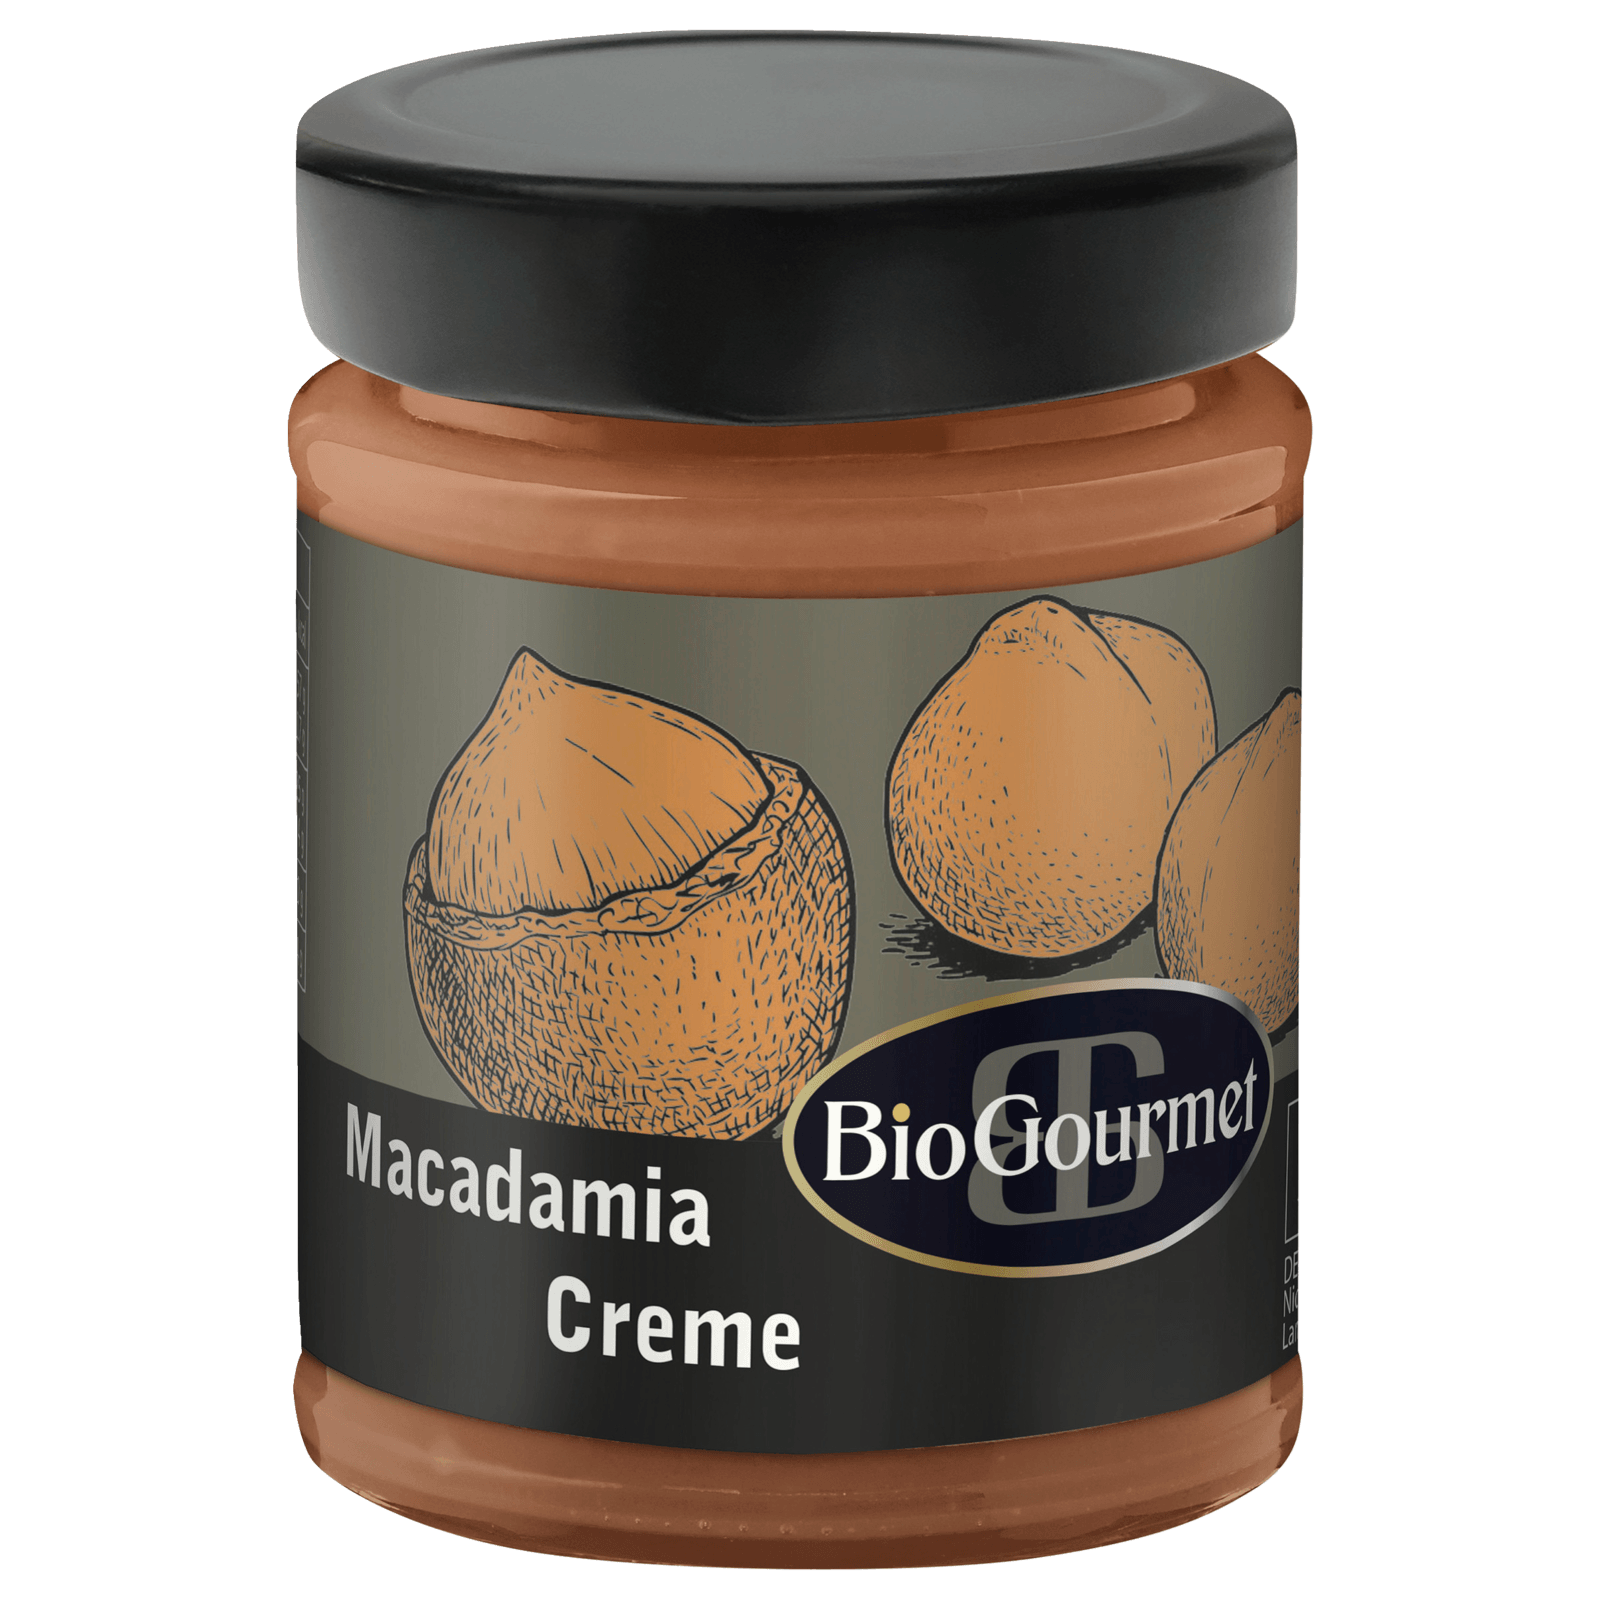 BioGourmet Bio Macadamia Creme 250g bei REWE online bestellen!